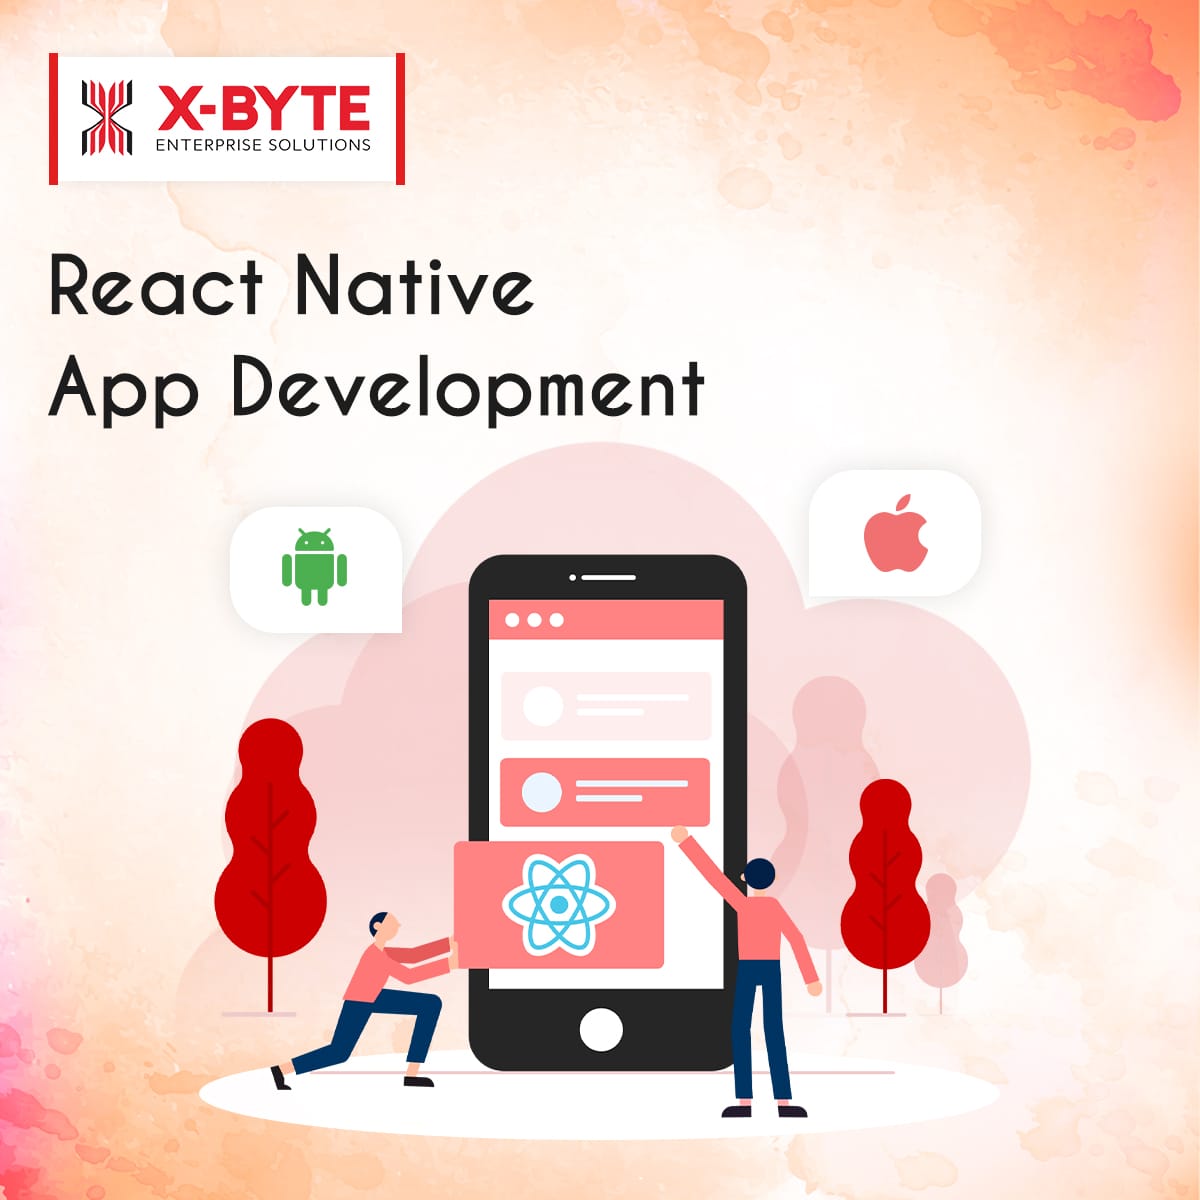 | 32 xBYTE|

React Native
App Development

=
|